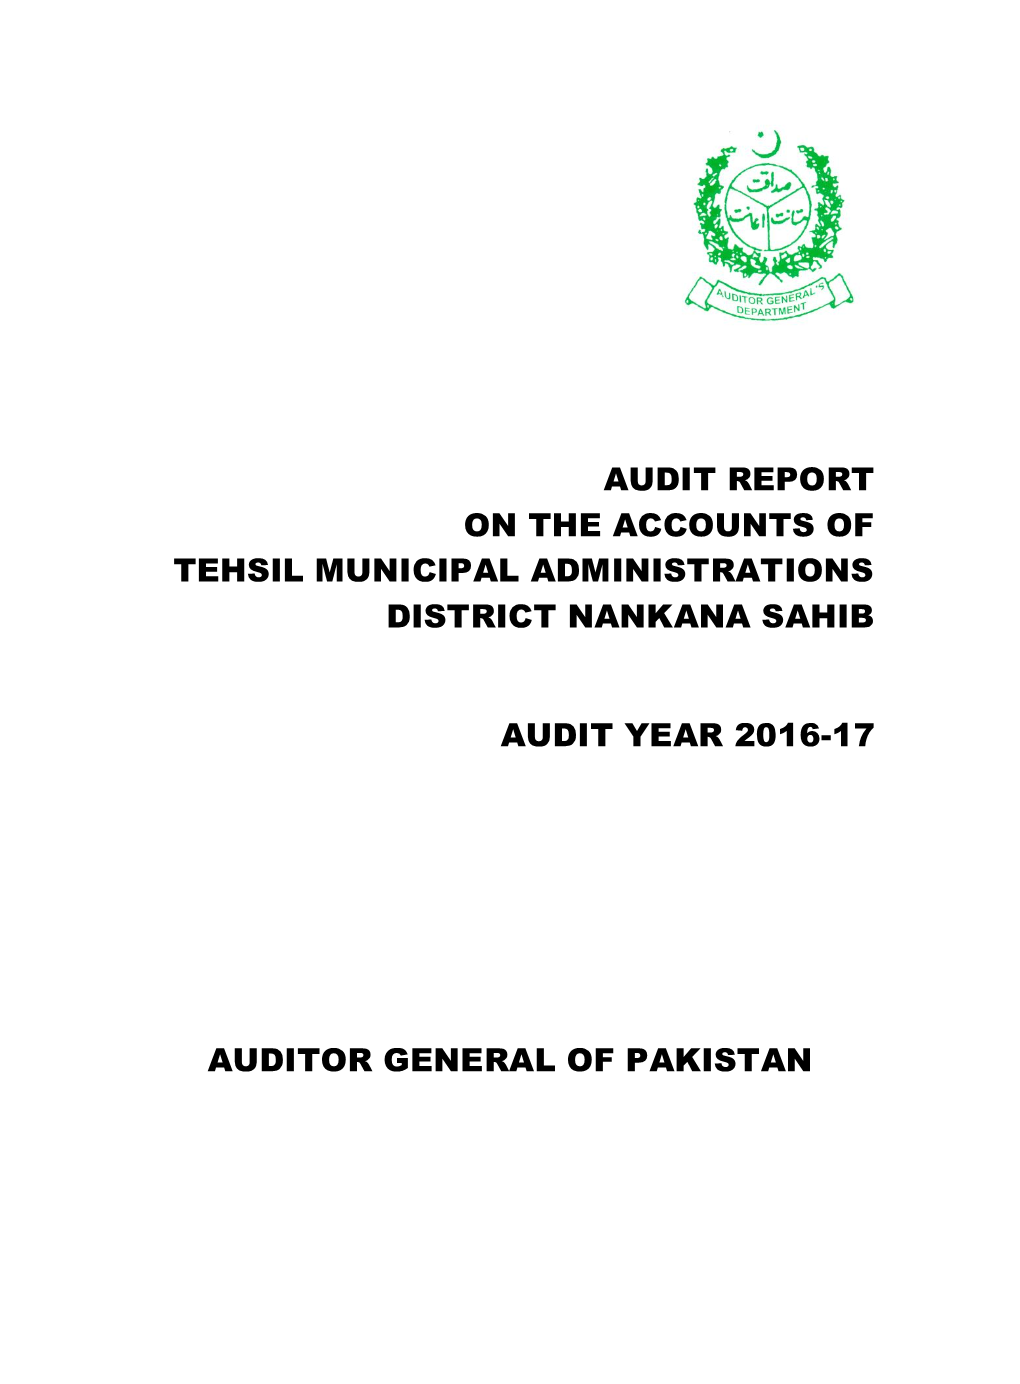 Audit Report on the Accounts of Tehsil Municipal Administrations District Nankana Sahib